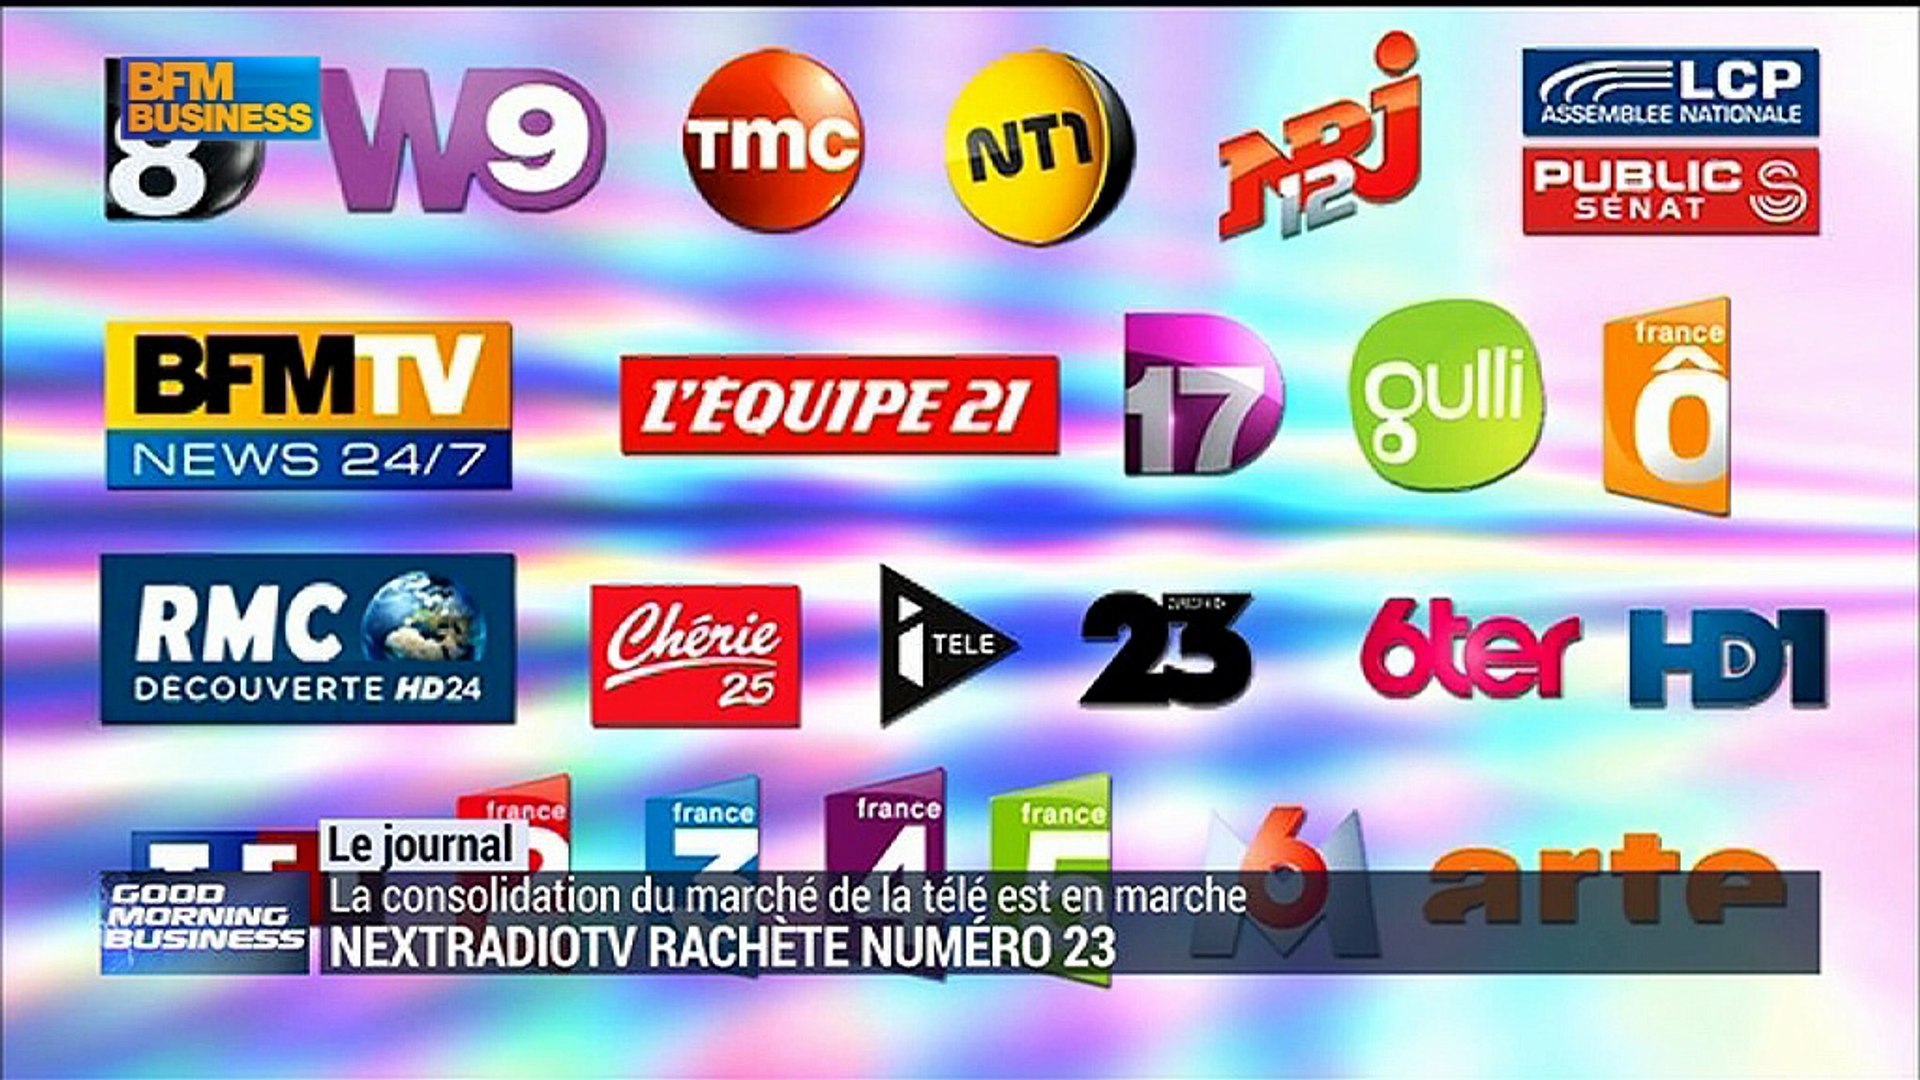 NextRadioTV rachète Numéro 23 - Vidéo Dailymotion